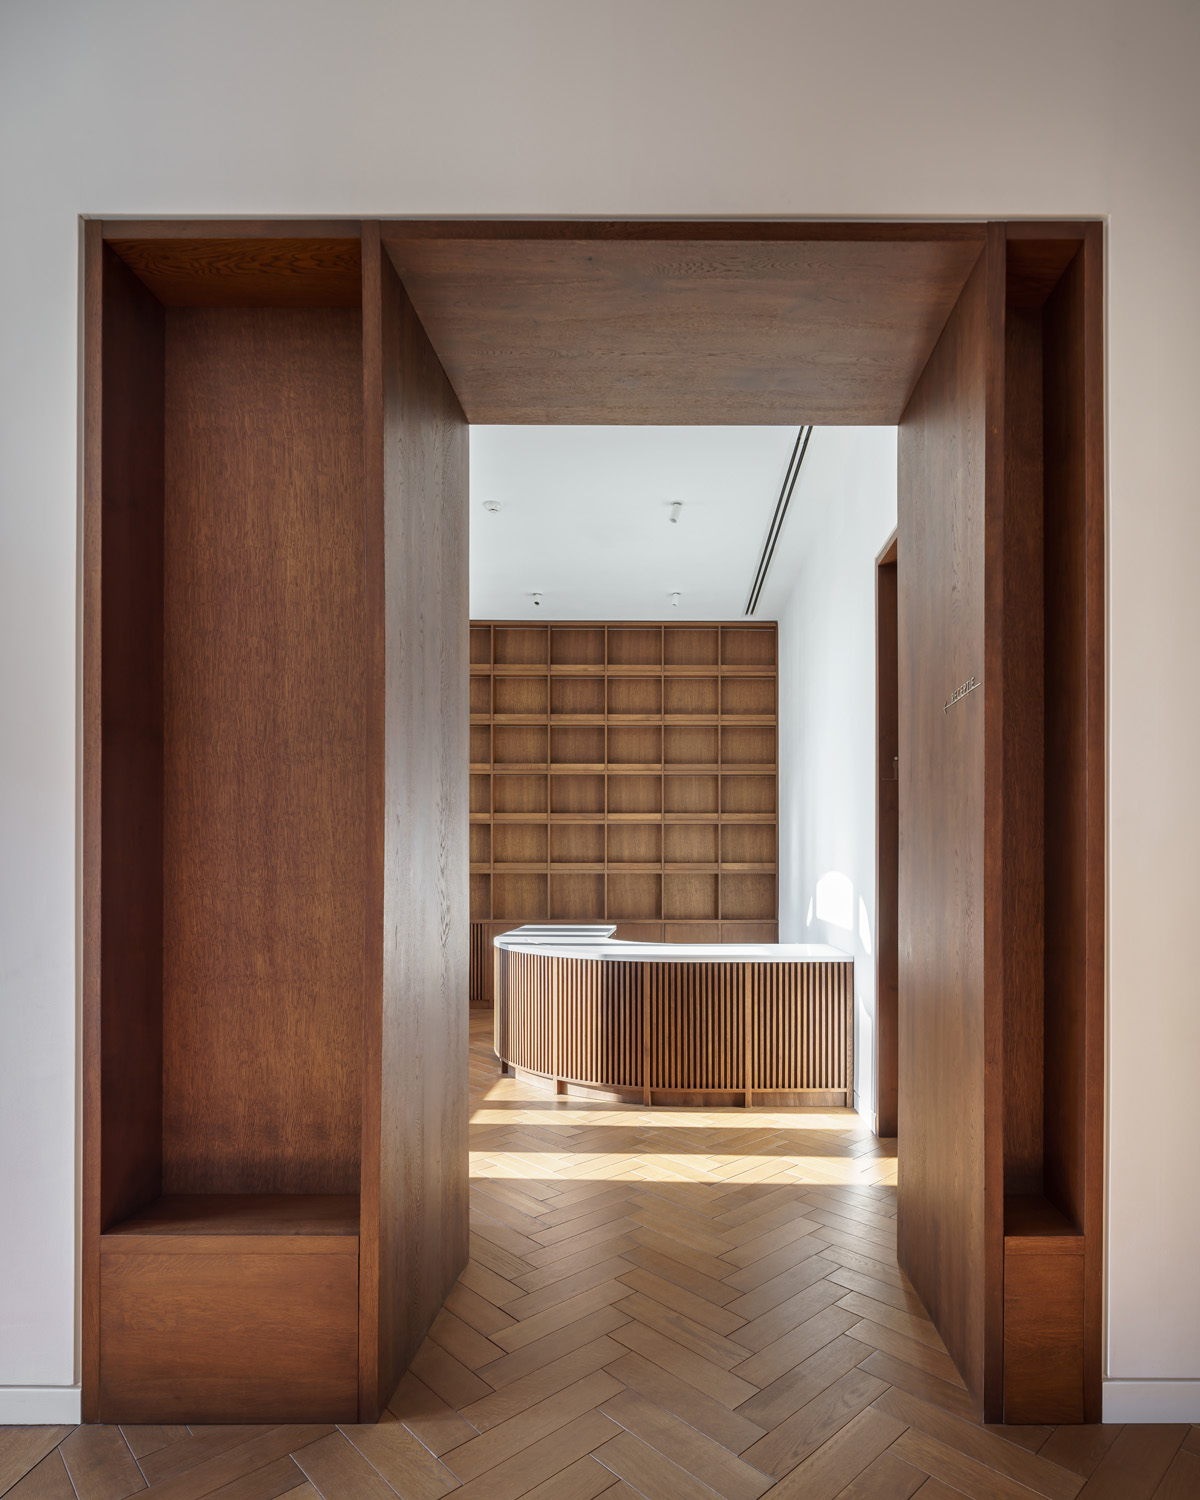 Wood-clad hallway by Manea Kella - luxury contemporary architects in London